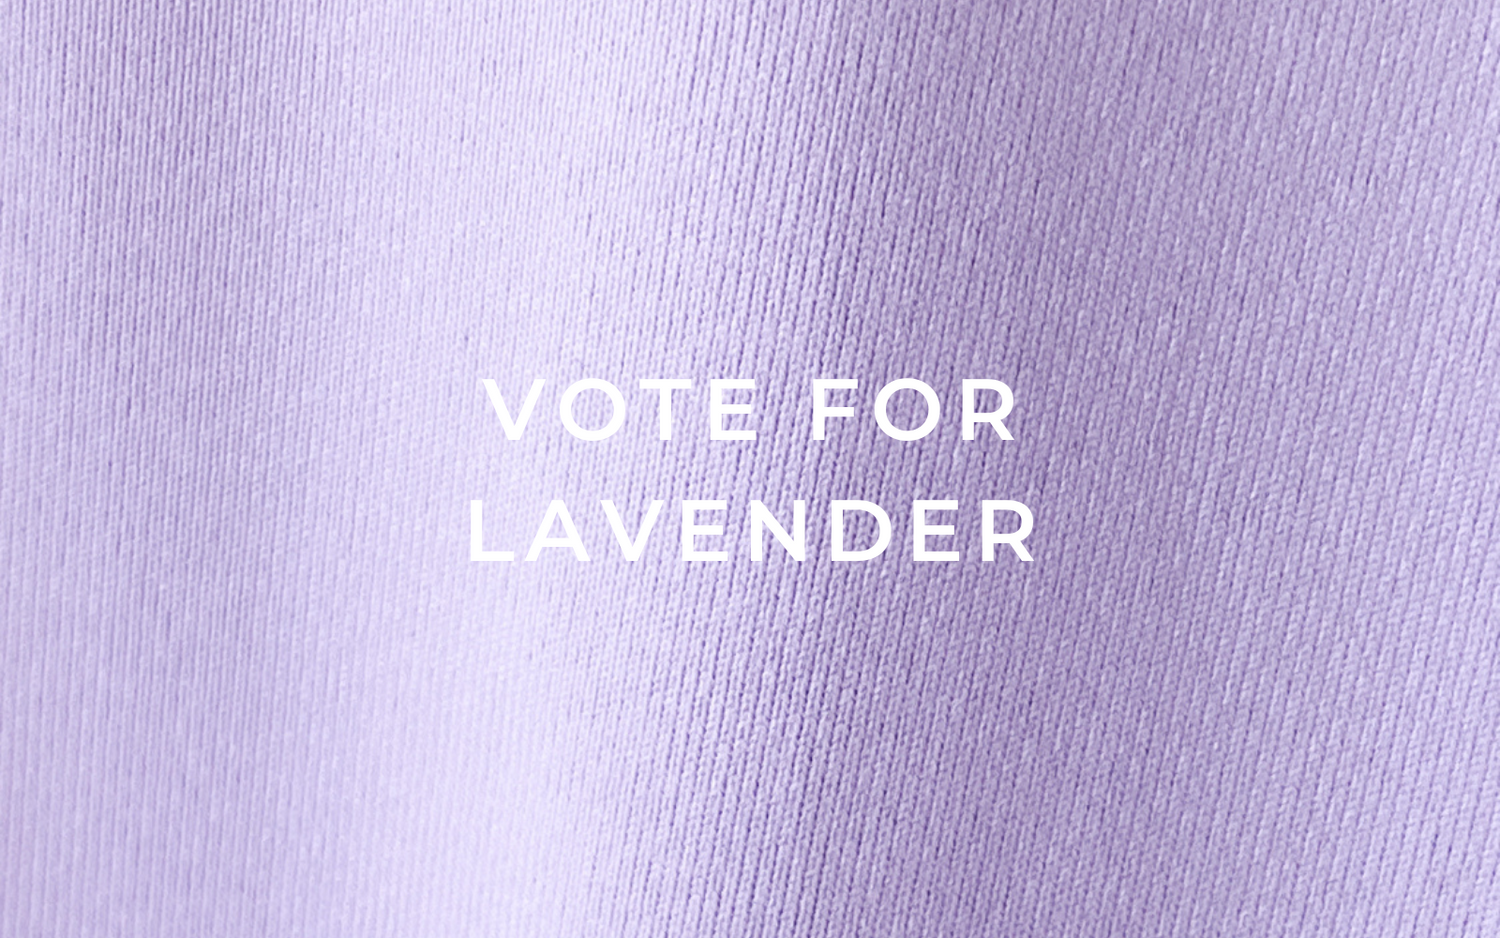 Vote for Lavender